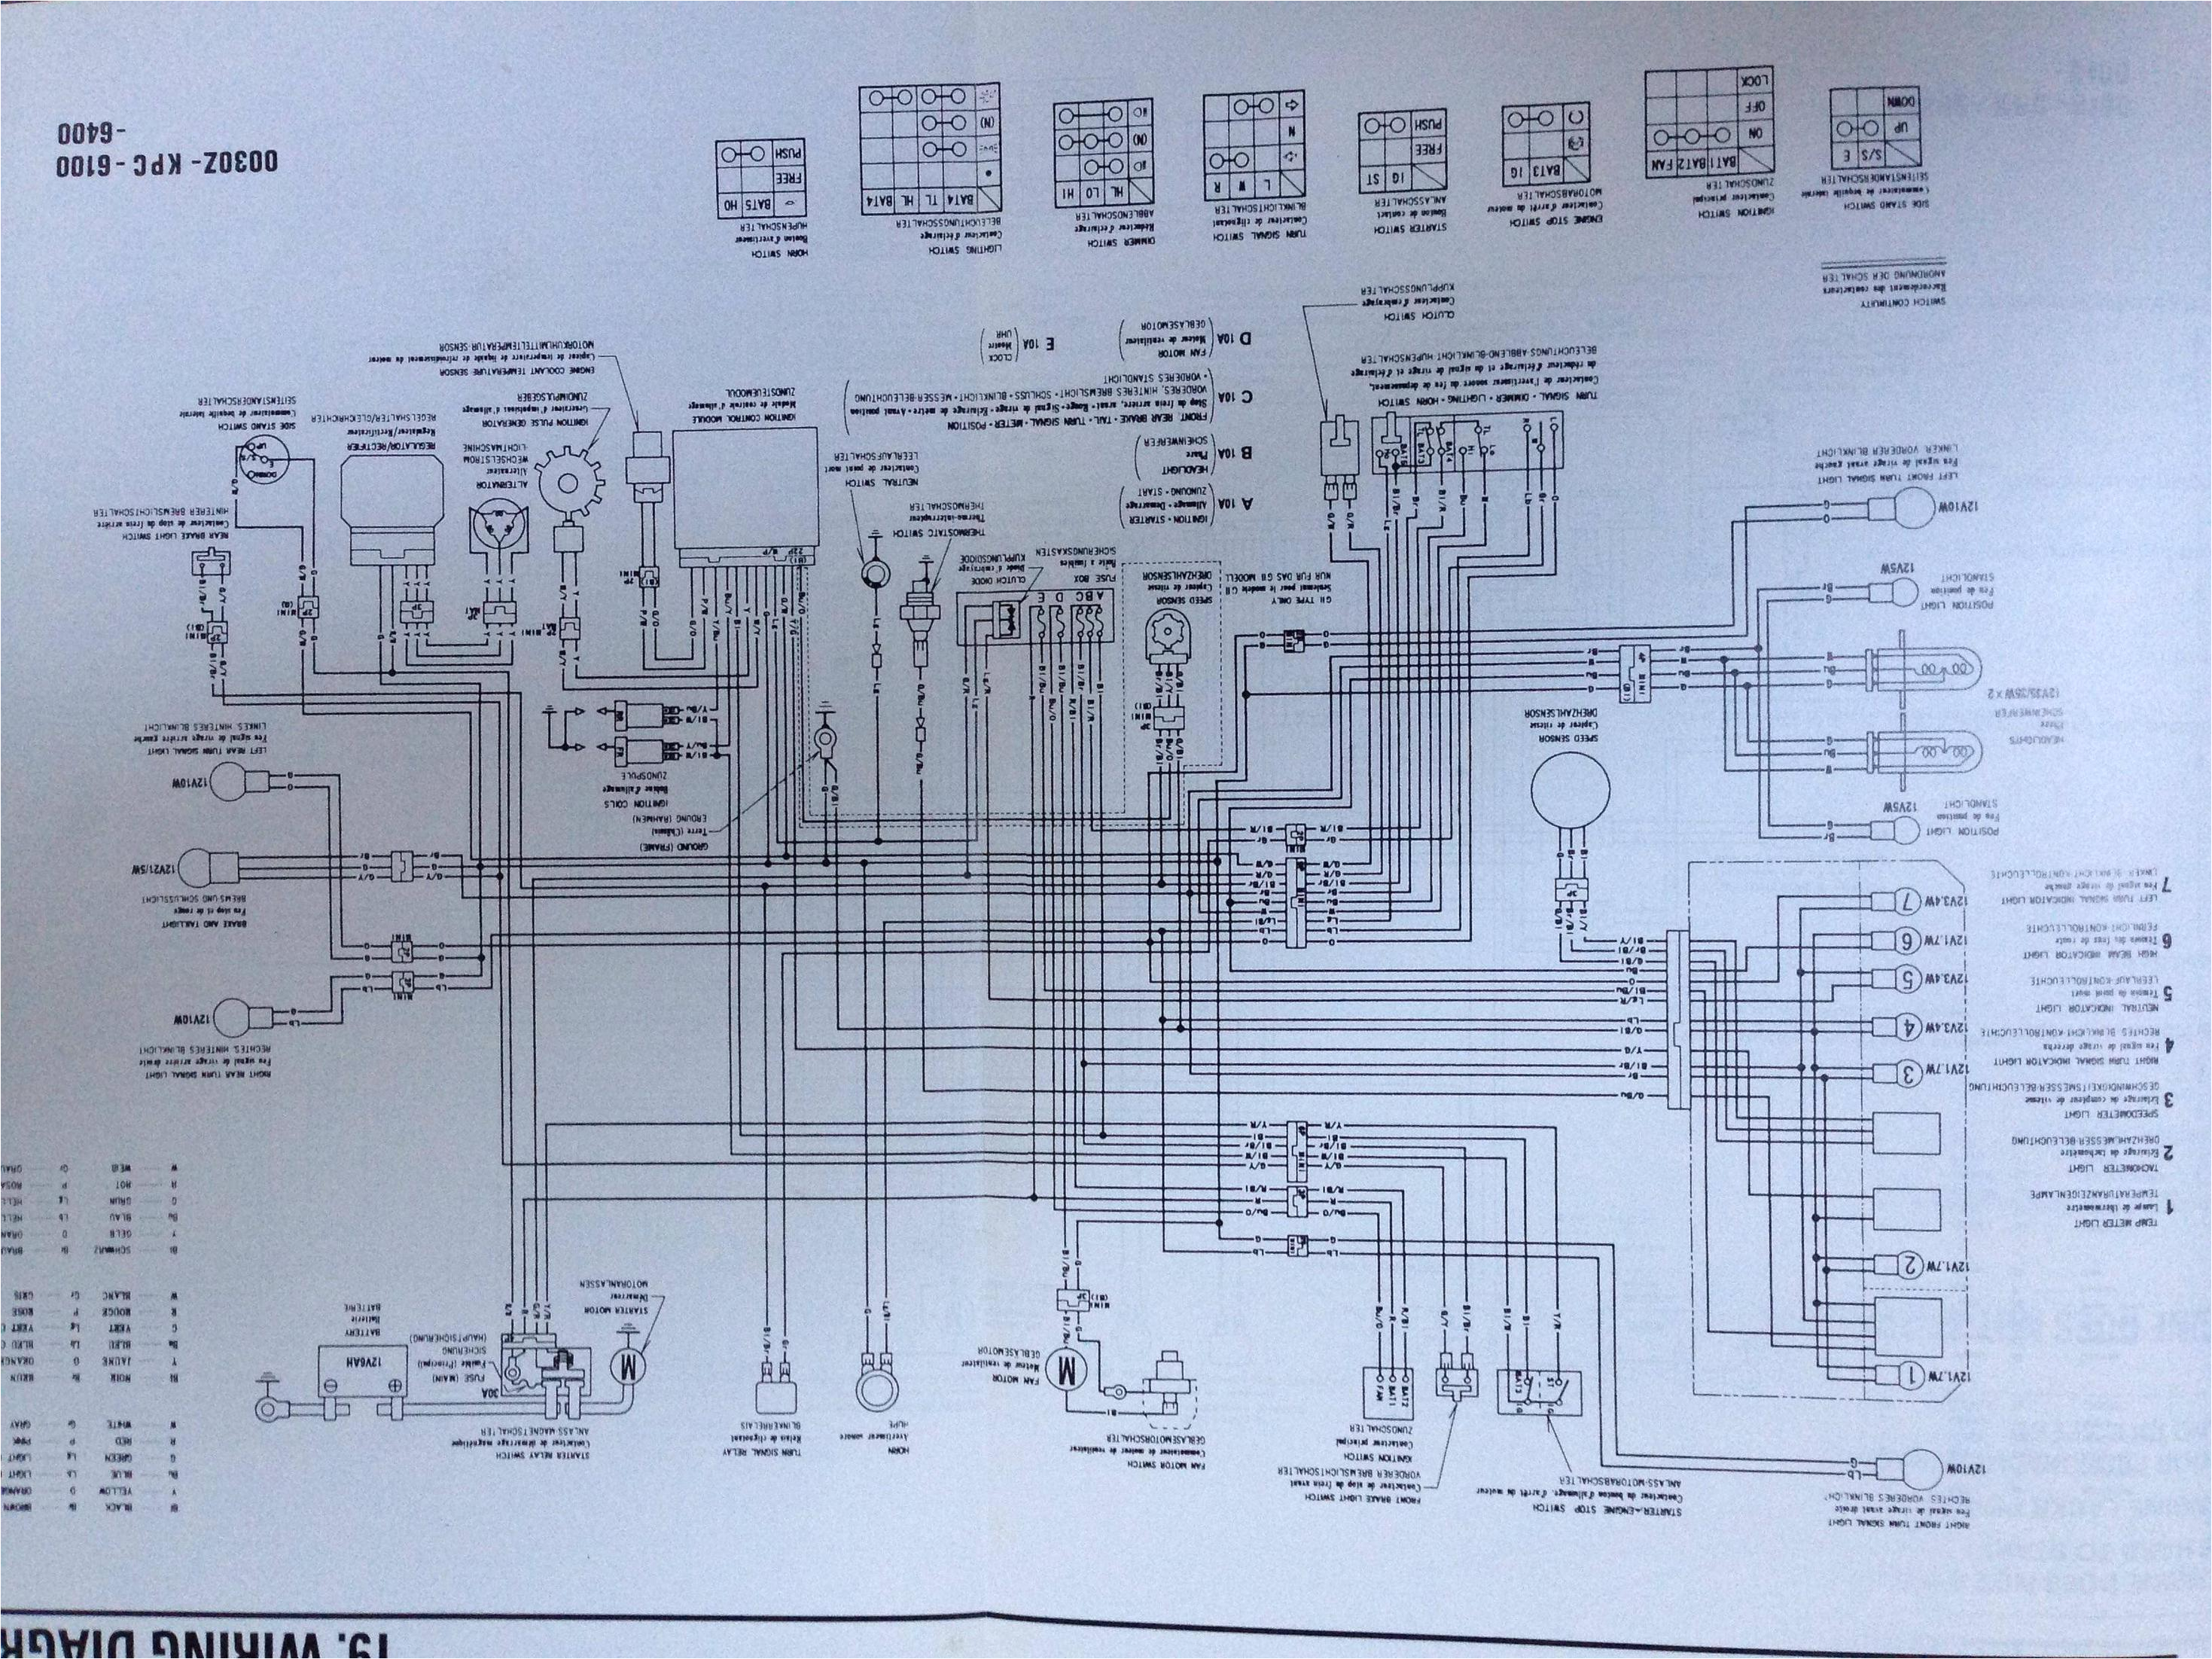 xl125 wiring diagram wiring diagram info reznor xl 125 wiring diagram xl125 wiring diagram